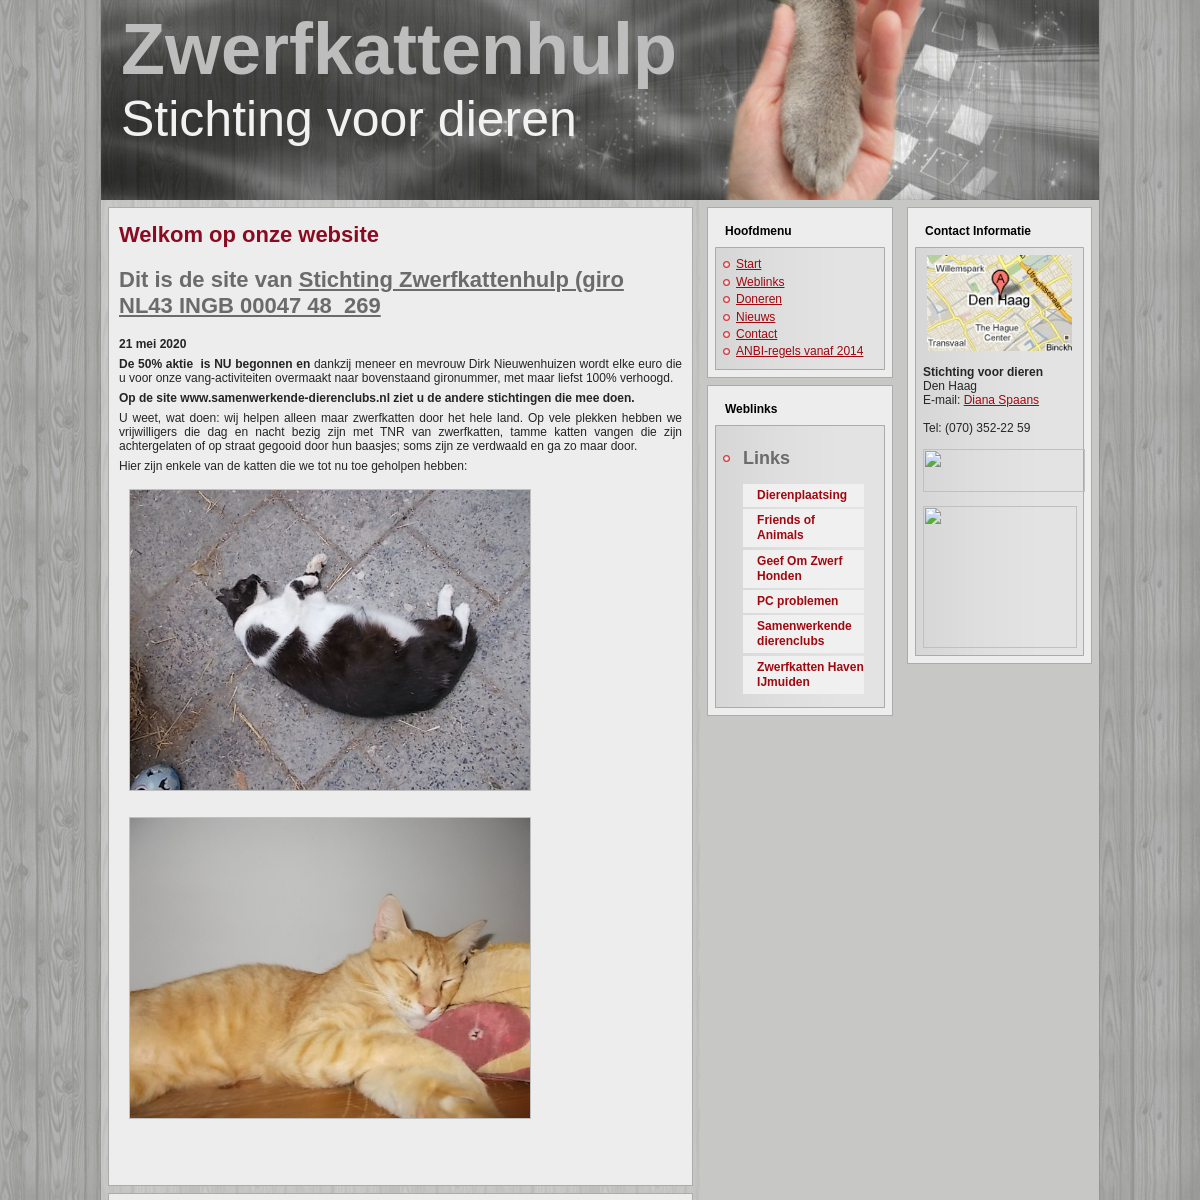 A complete backup of zwerfkattenhulp.nl